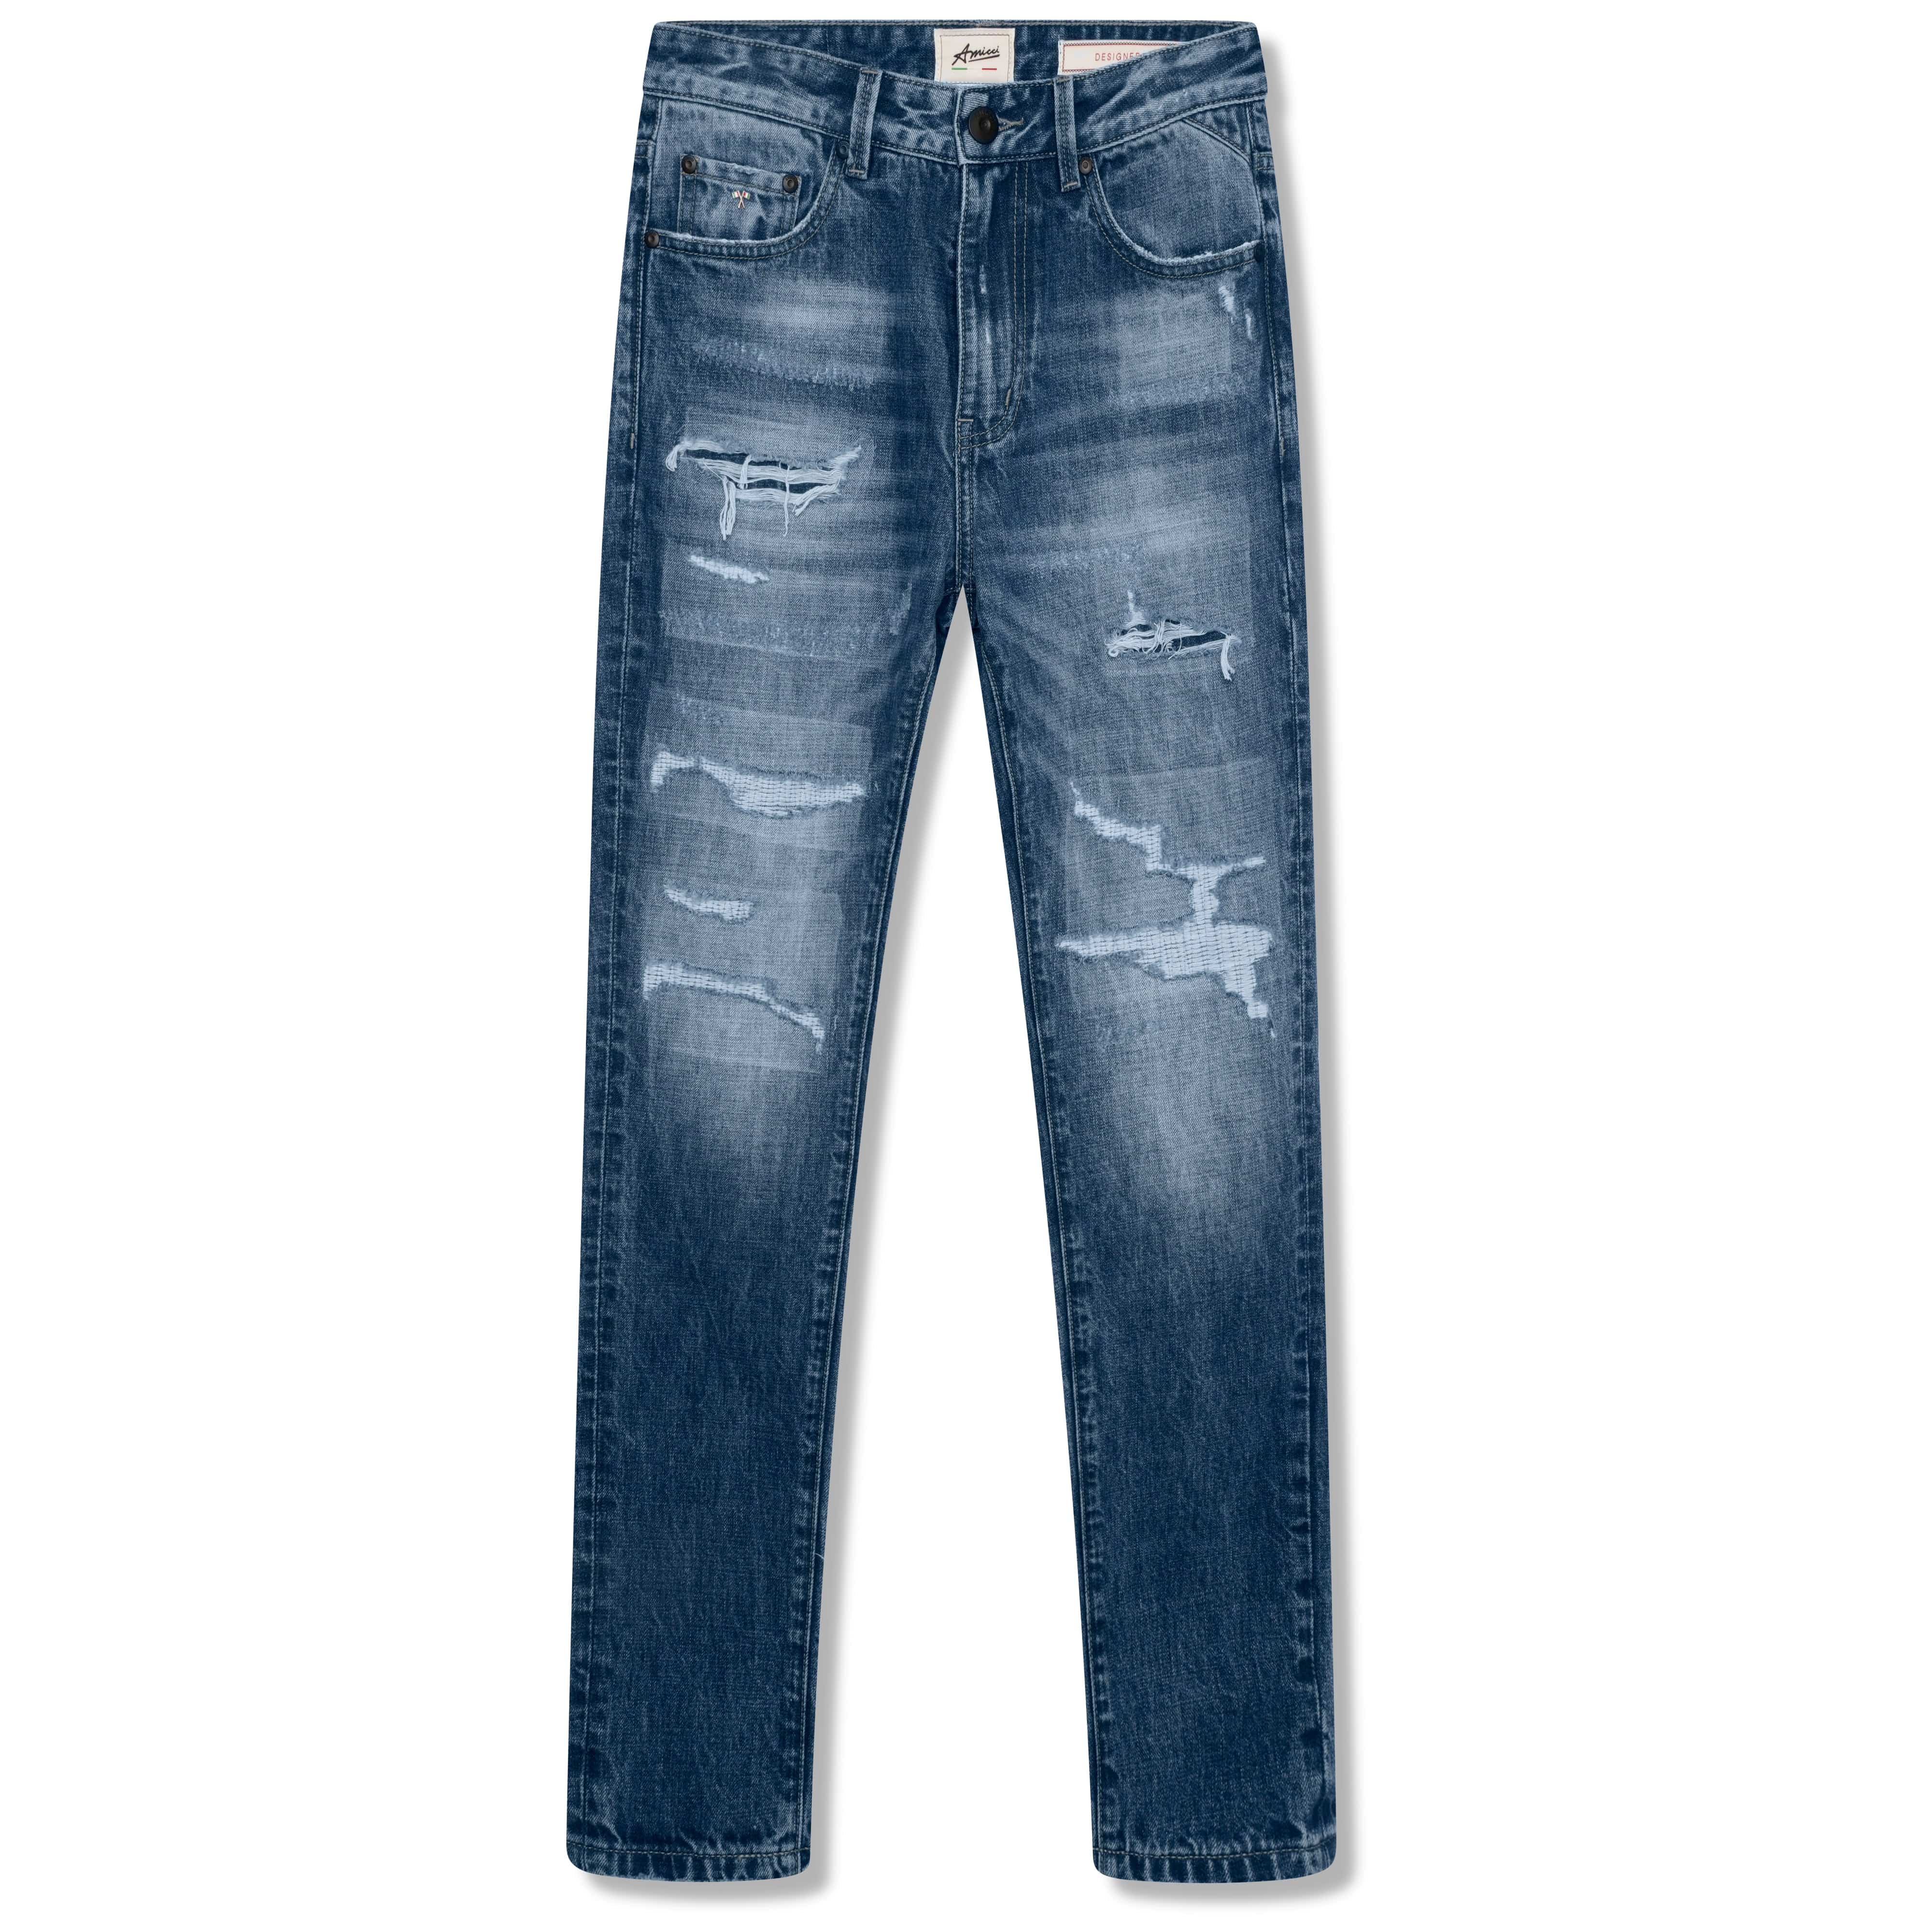 Amicci Men's Enrico Ripped Jeans - Premium Quality Denim